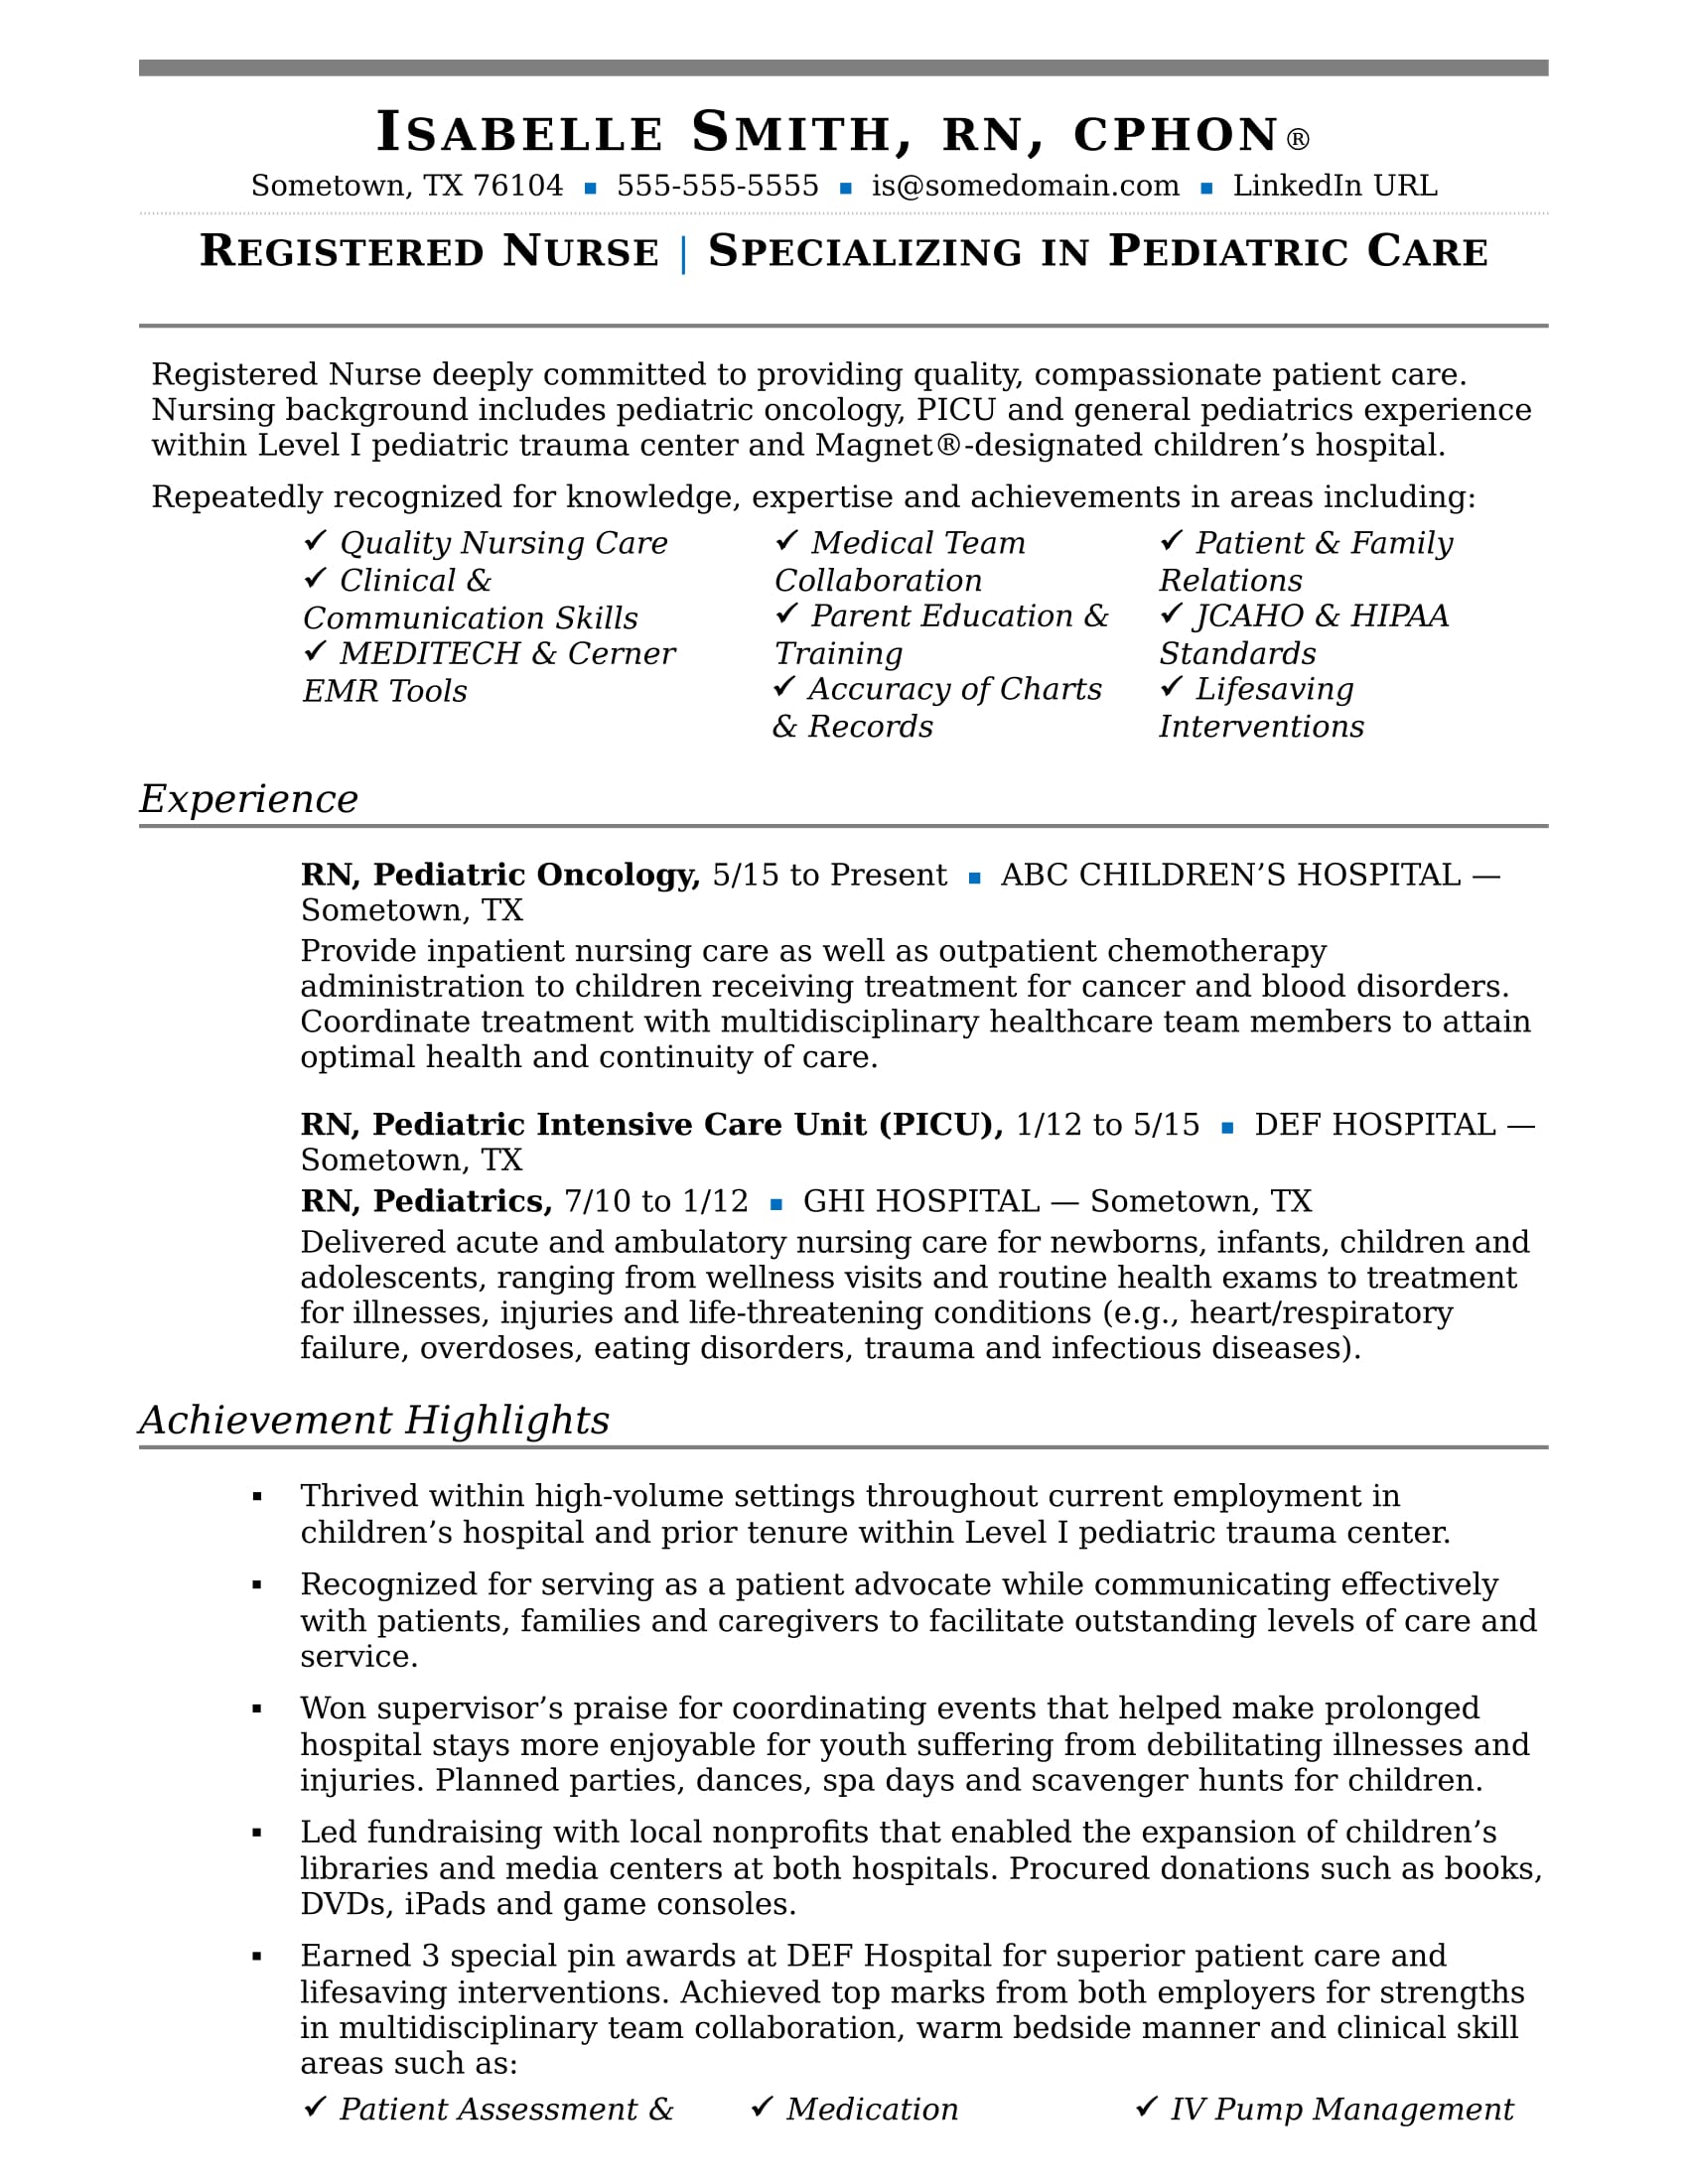 Rn Resume Examples Nurse rn resume examples|wikiresume.com